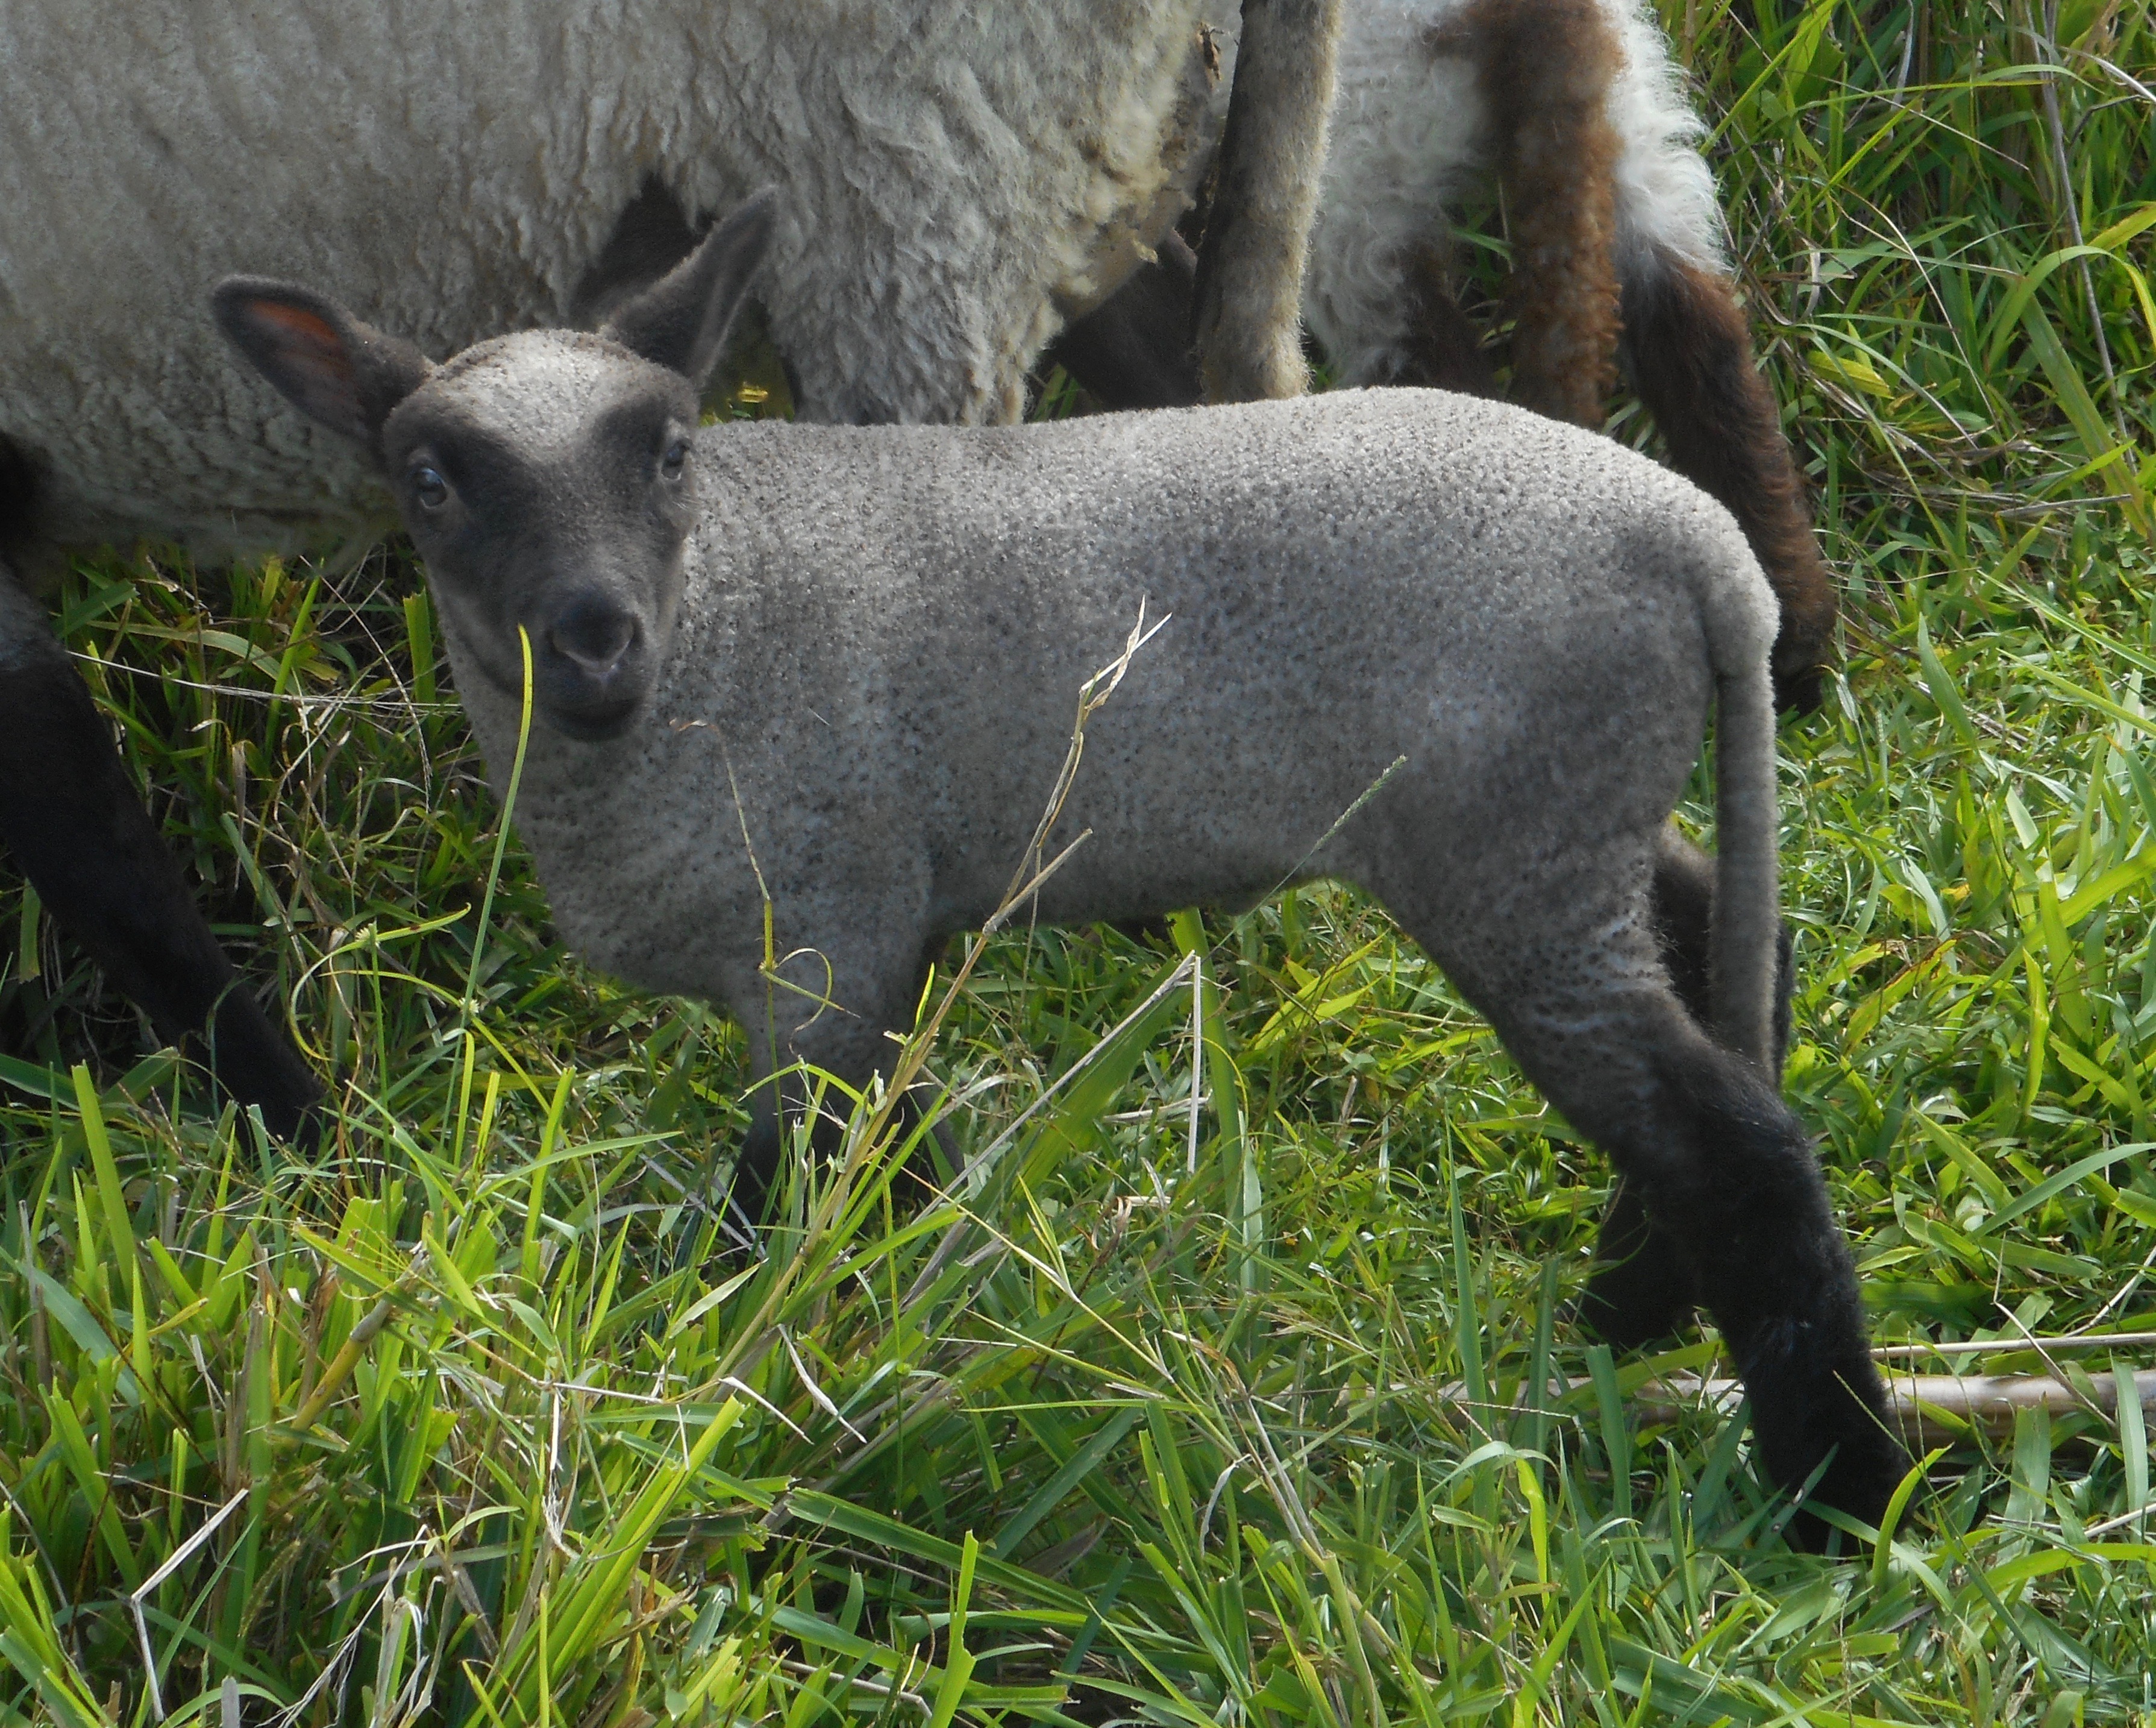 June's 1st born lamb